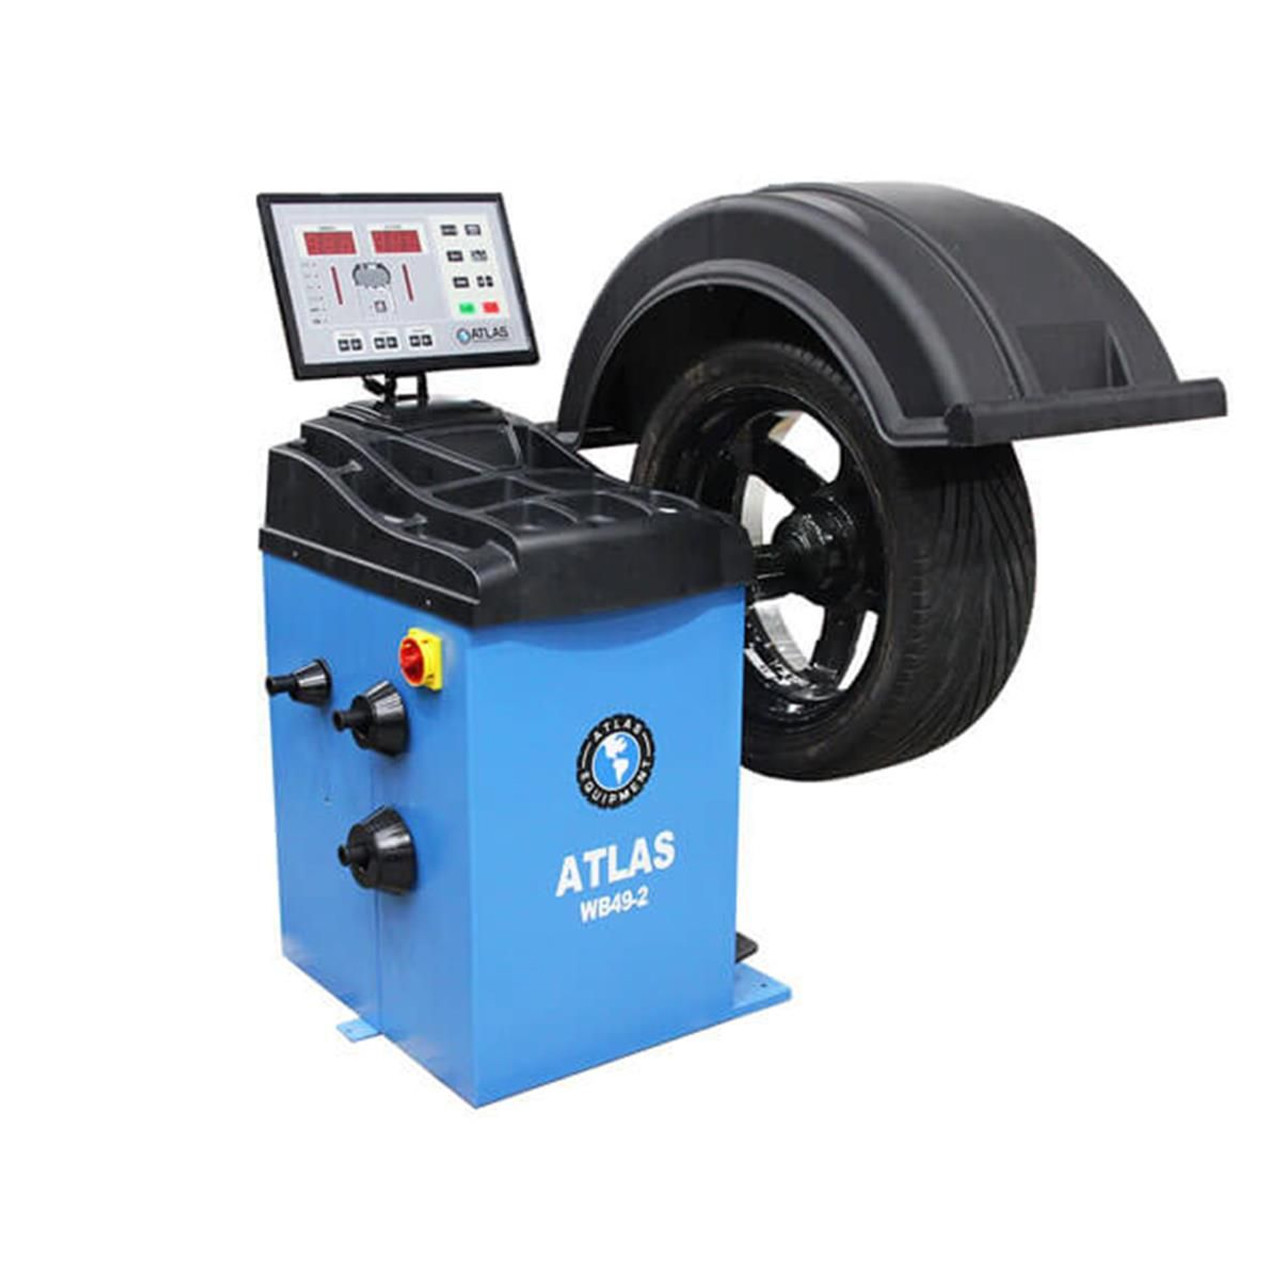 ATLAS® WB49-2 Premium 2D Computer Wheel Balancer